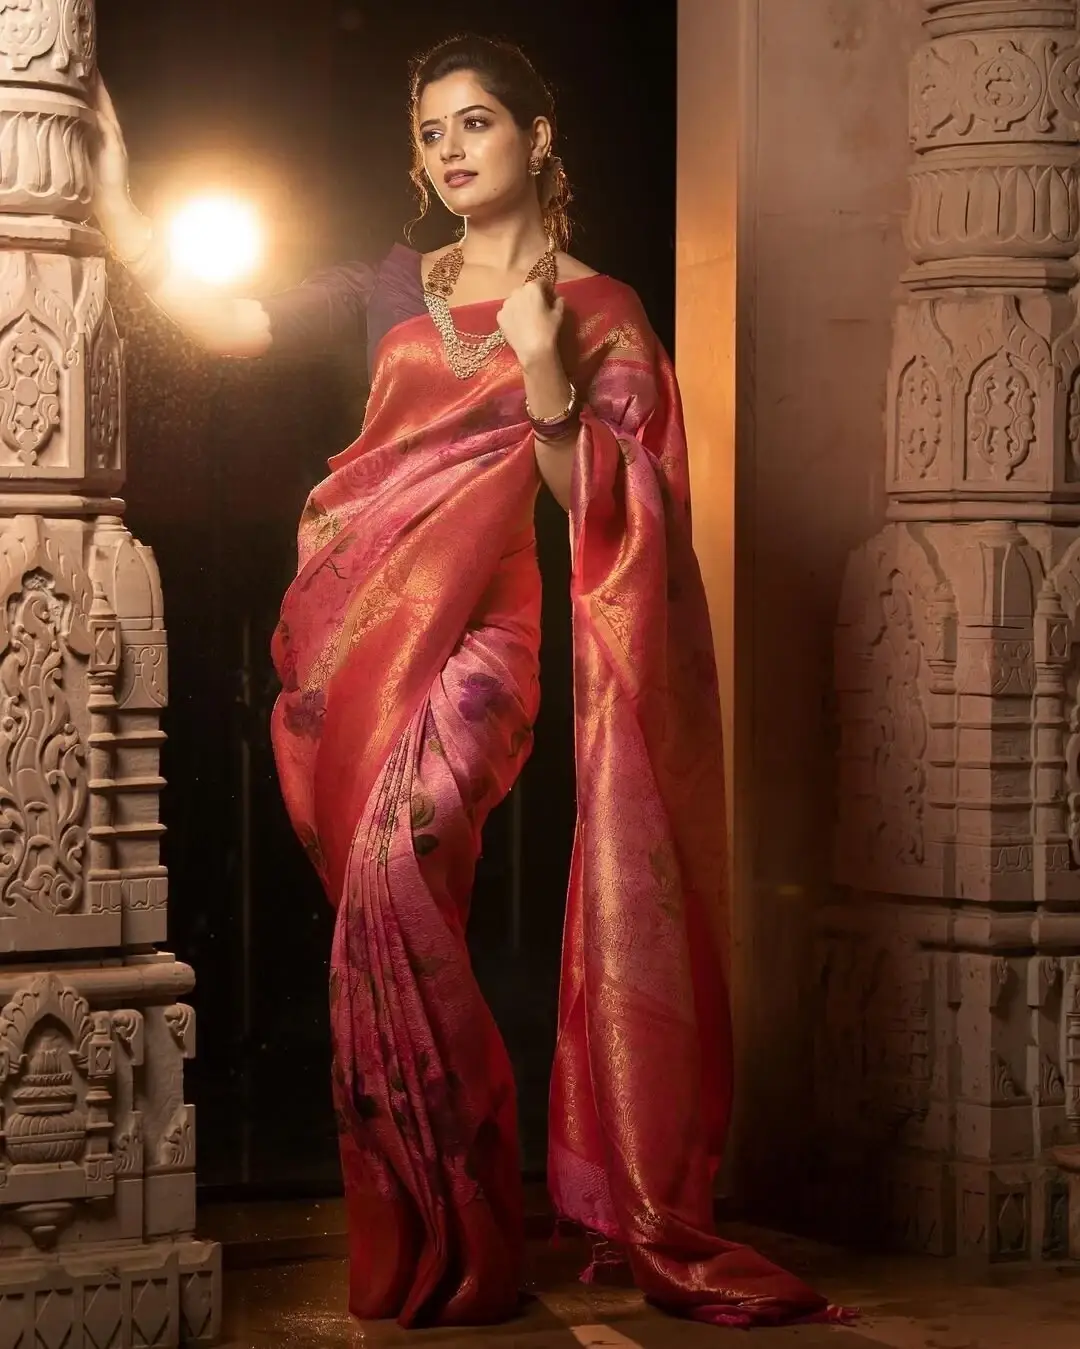 SOUTH INDIAN MODEL ASHIKA RANGANATH PHOTOSHOOT IN RED SAREE 3